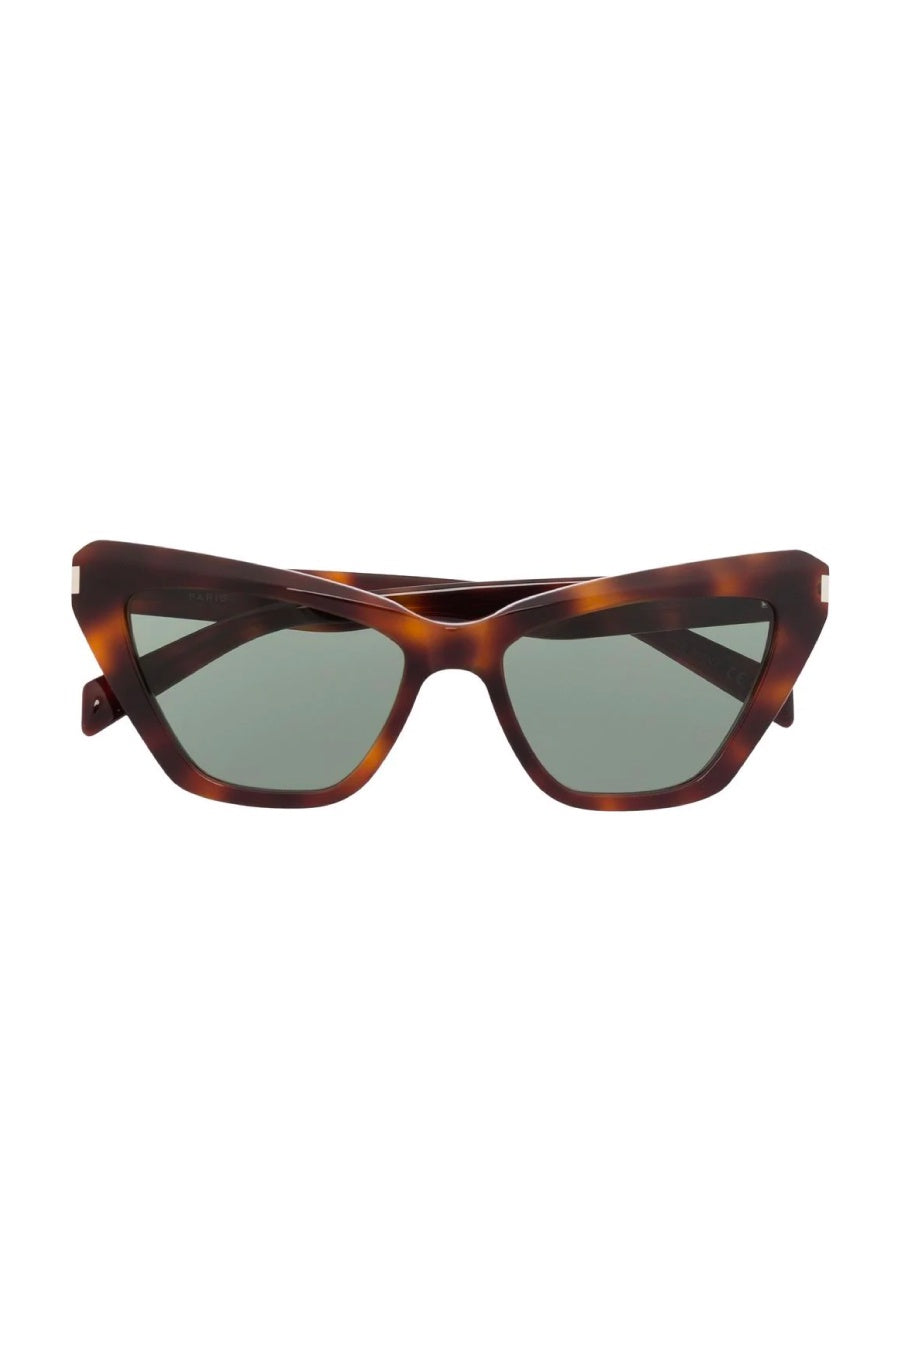 Saint Laurent Thin Cat Eye Sunglasses - Havana